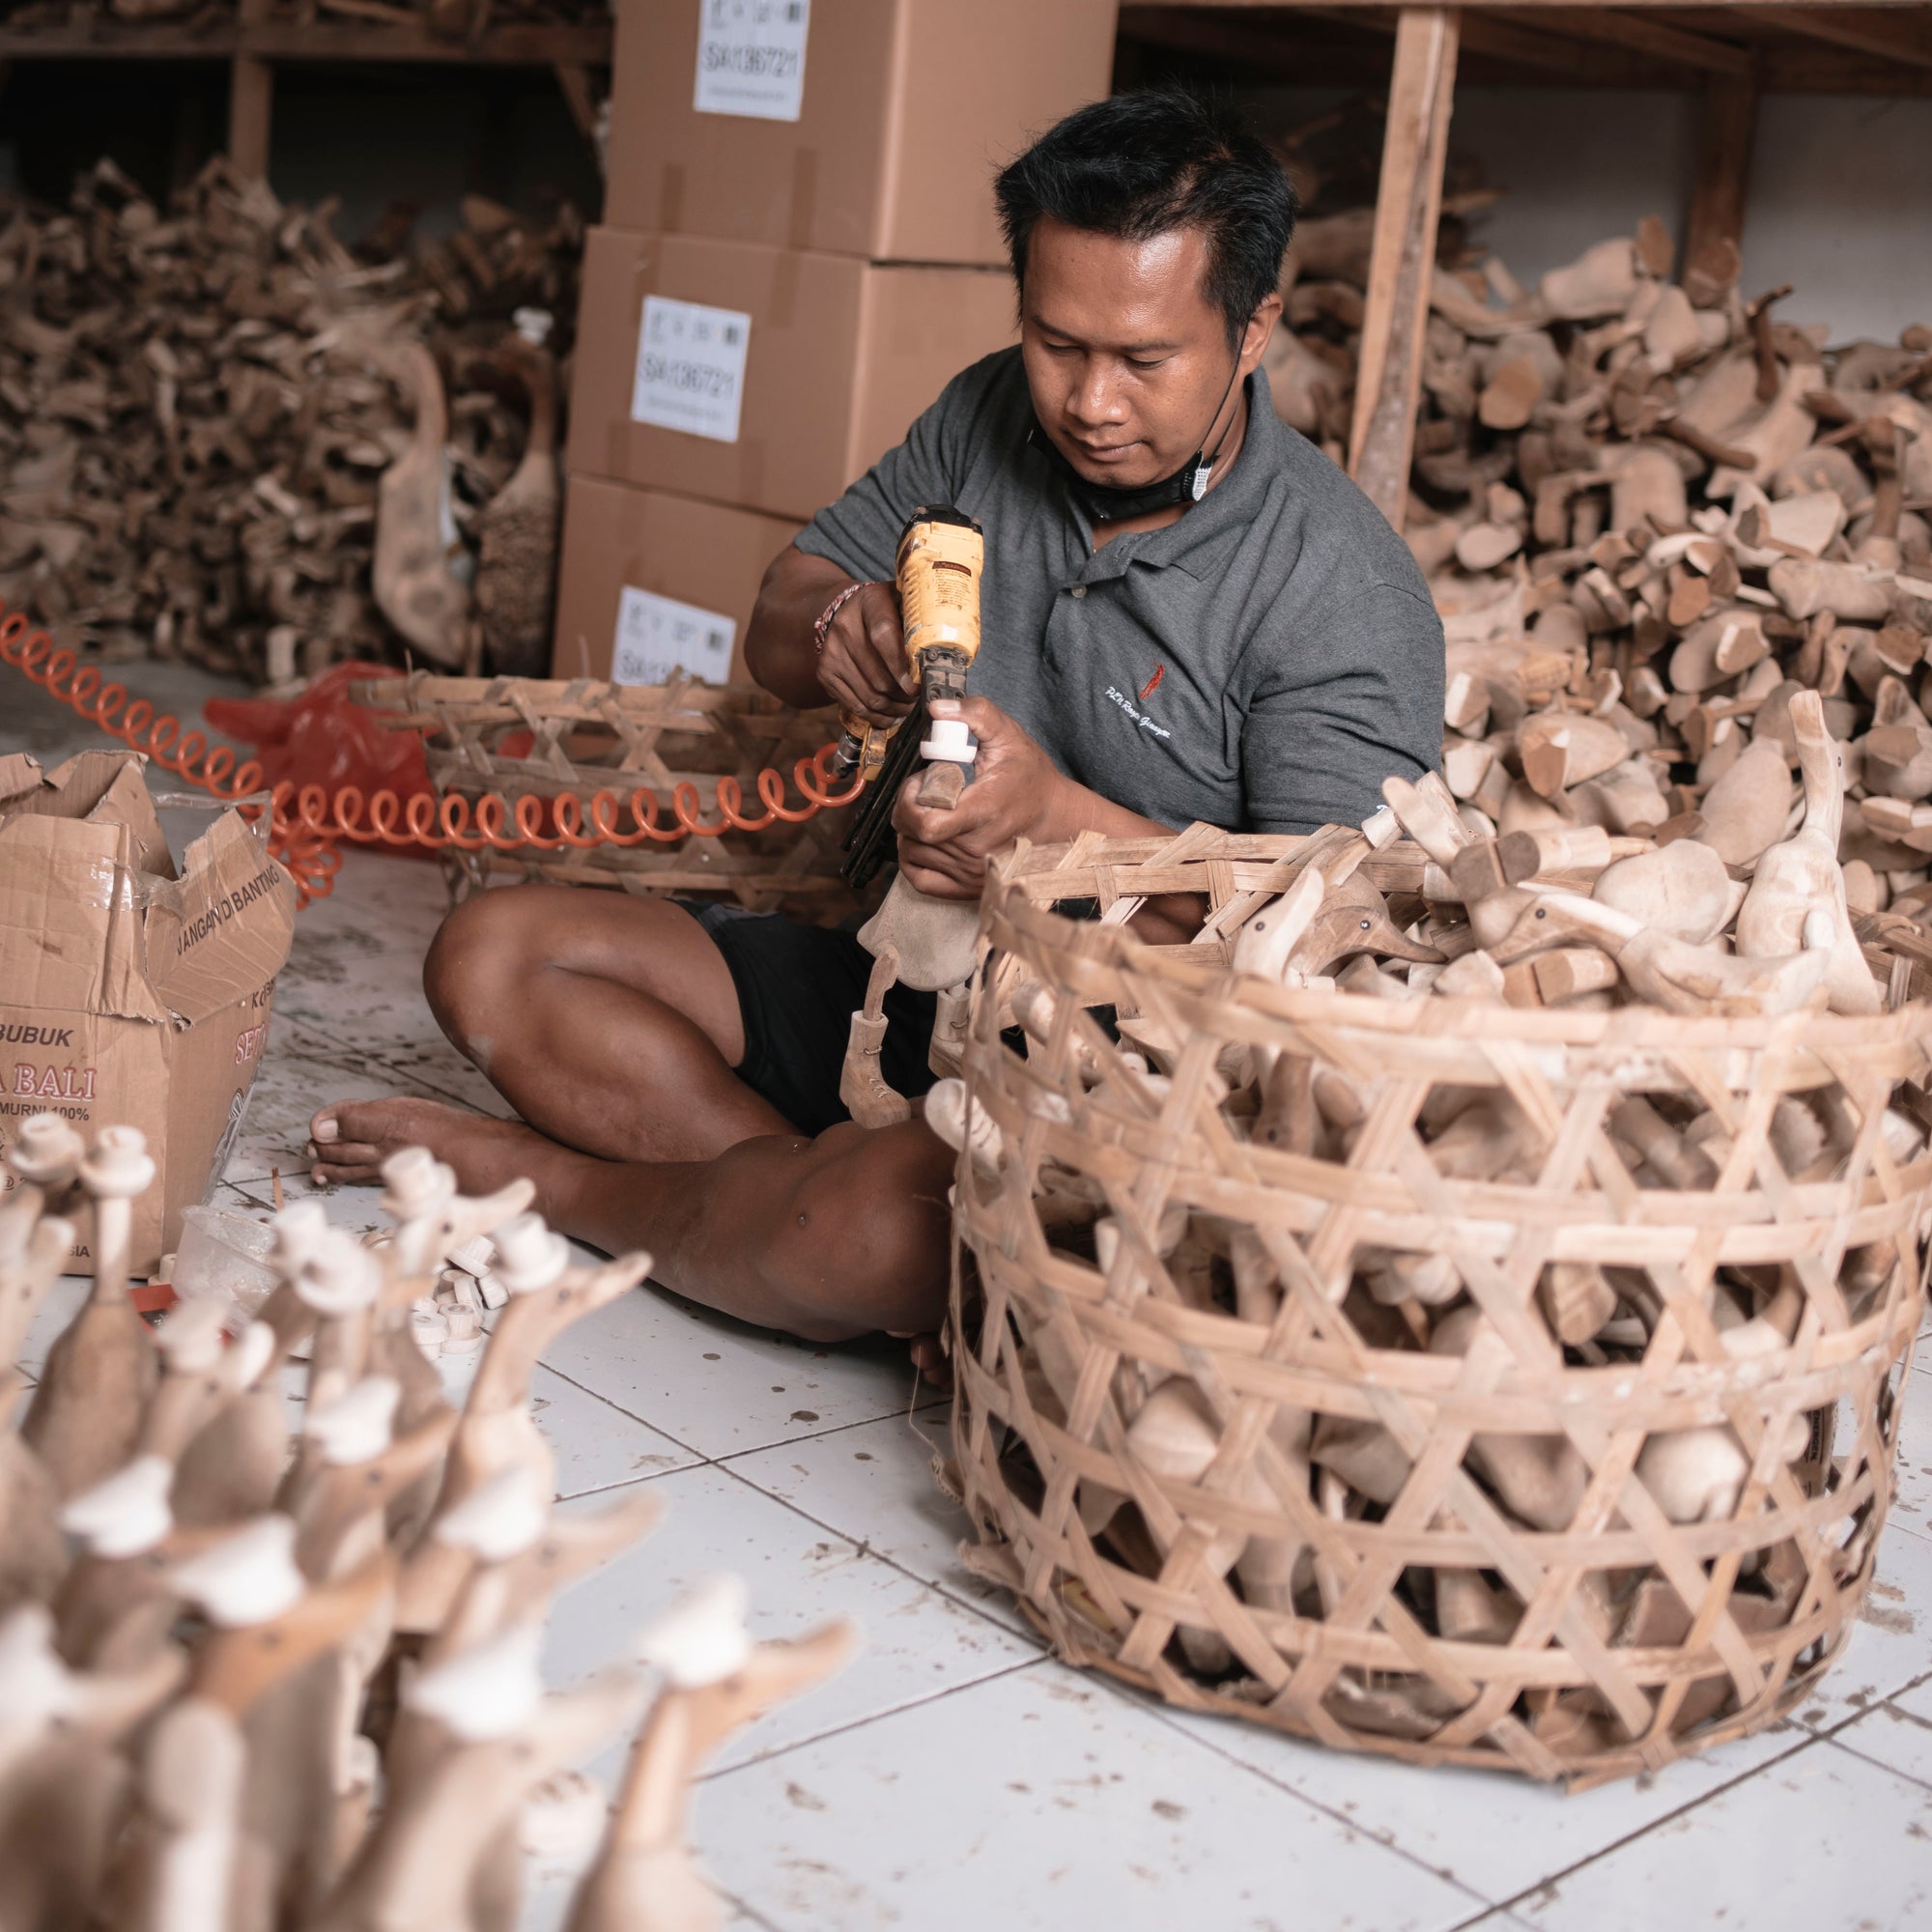 artisan makes wooden duck next to basket of ducks in his workshop